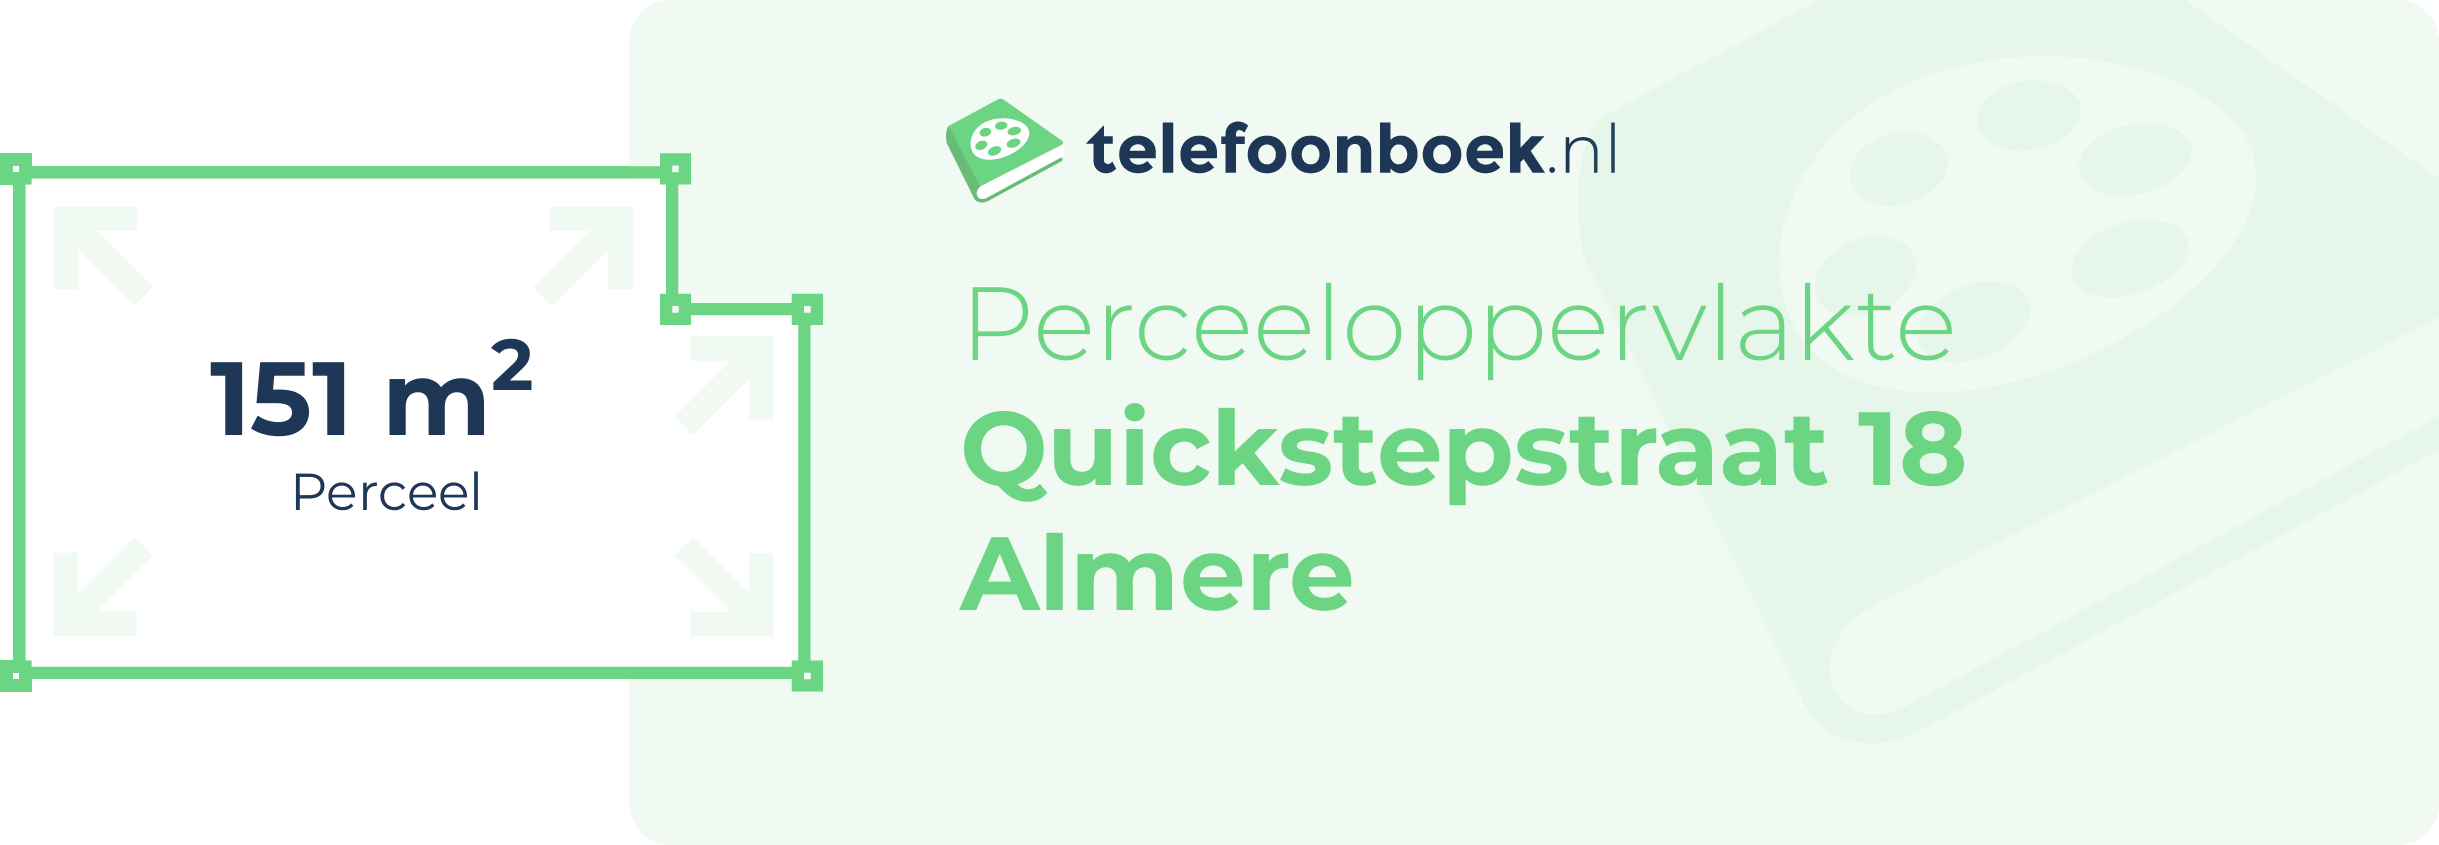 Perceeloppervlakte Quickstepstraat 18 Almere